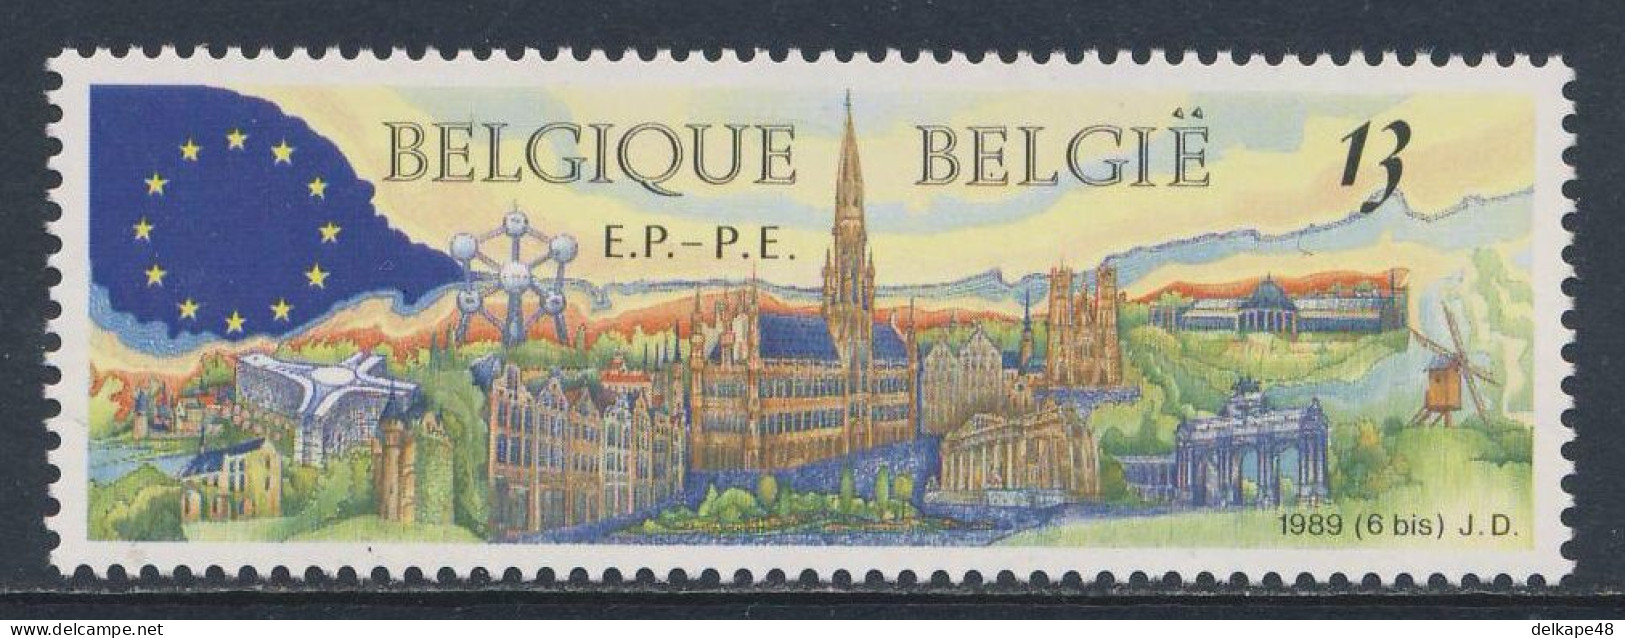 Belgie Belgique Belgium 1989 Mi 2378 YT 2326 SG 2986 ** Brussels / Stadtansicht Brüssel, Europafahne - - Institutions Européennes